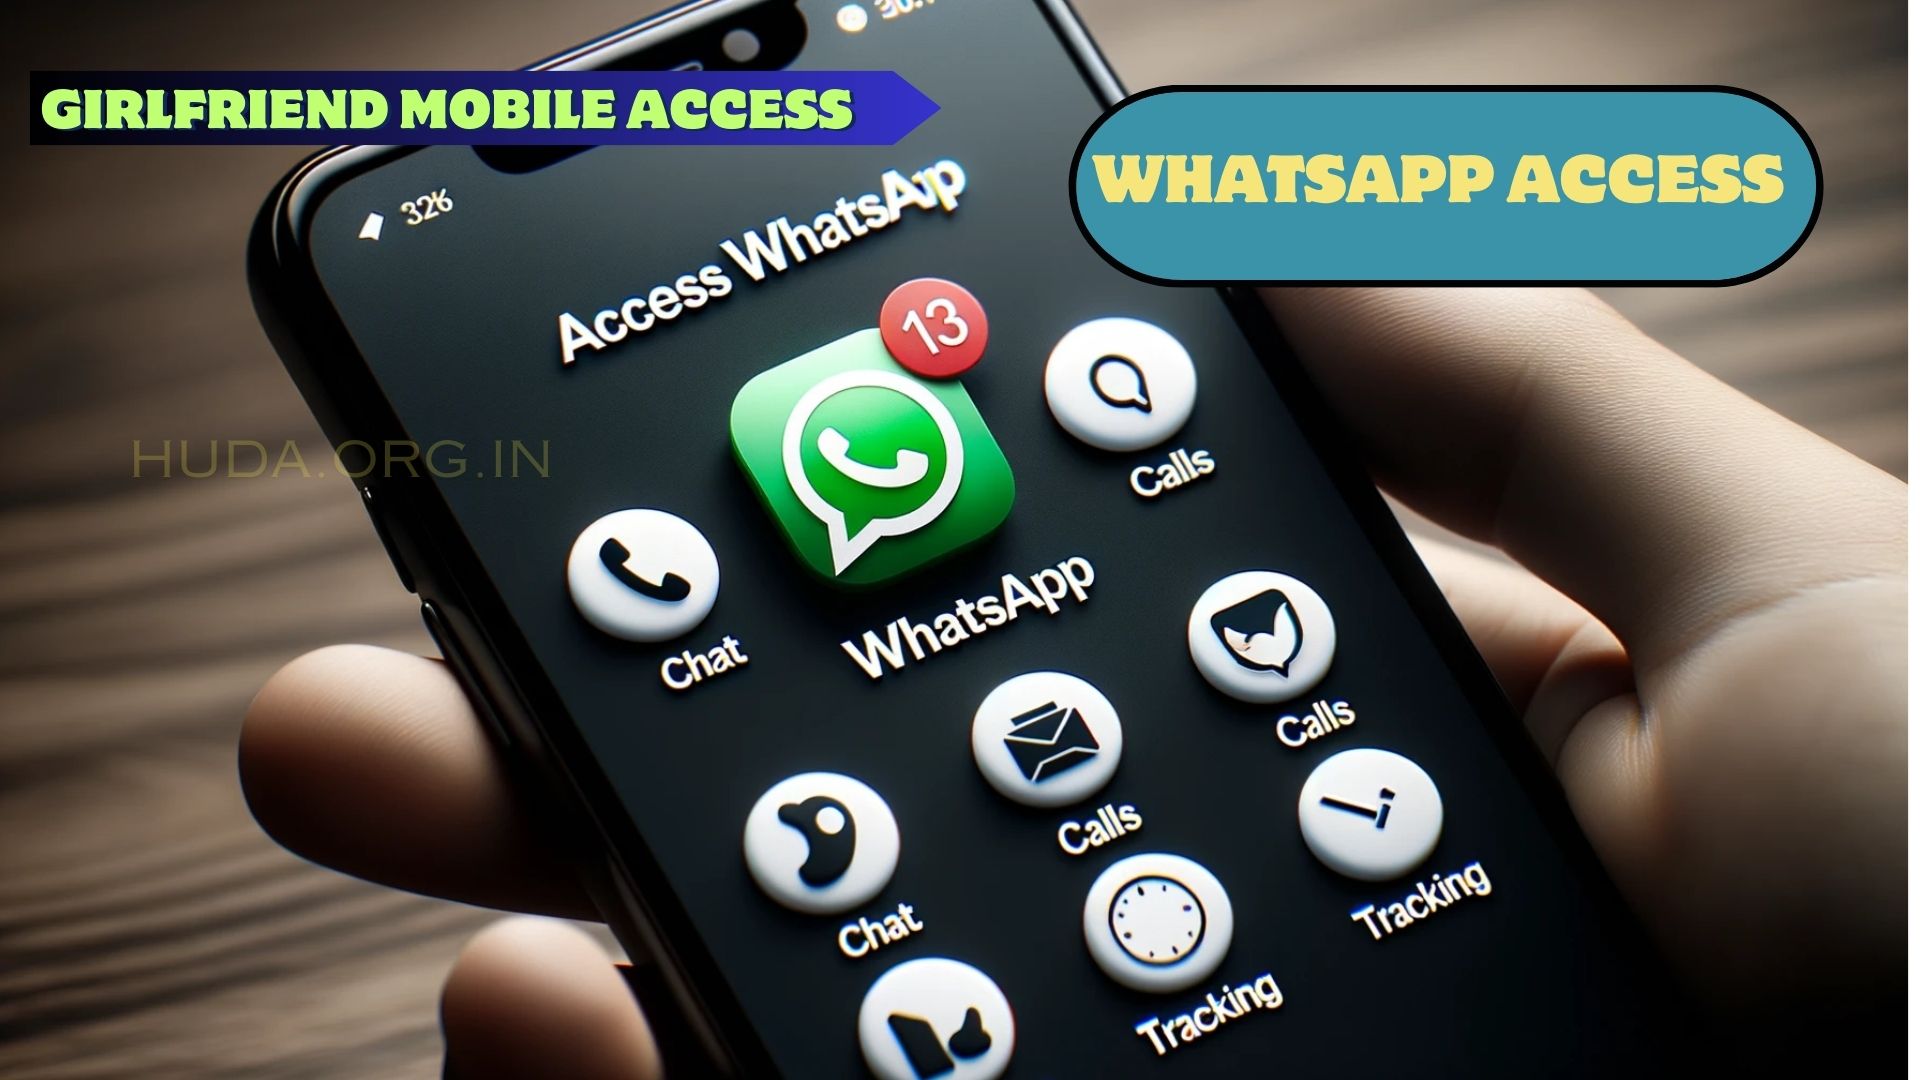 Girlfriend Mobile Access, Whatsapp Access